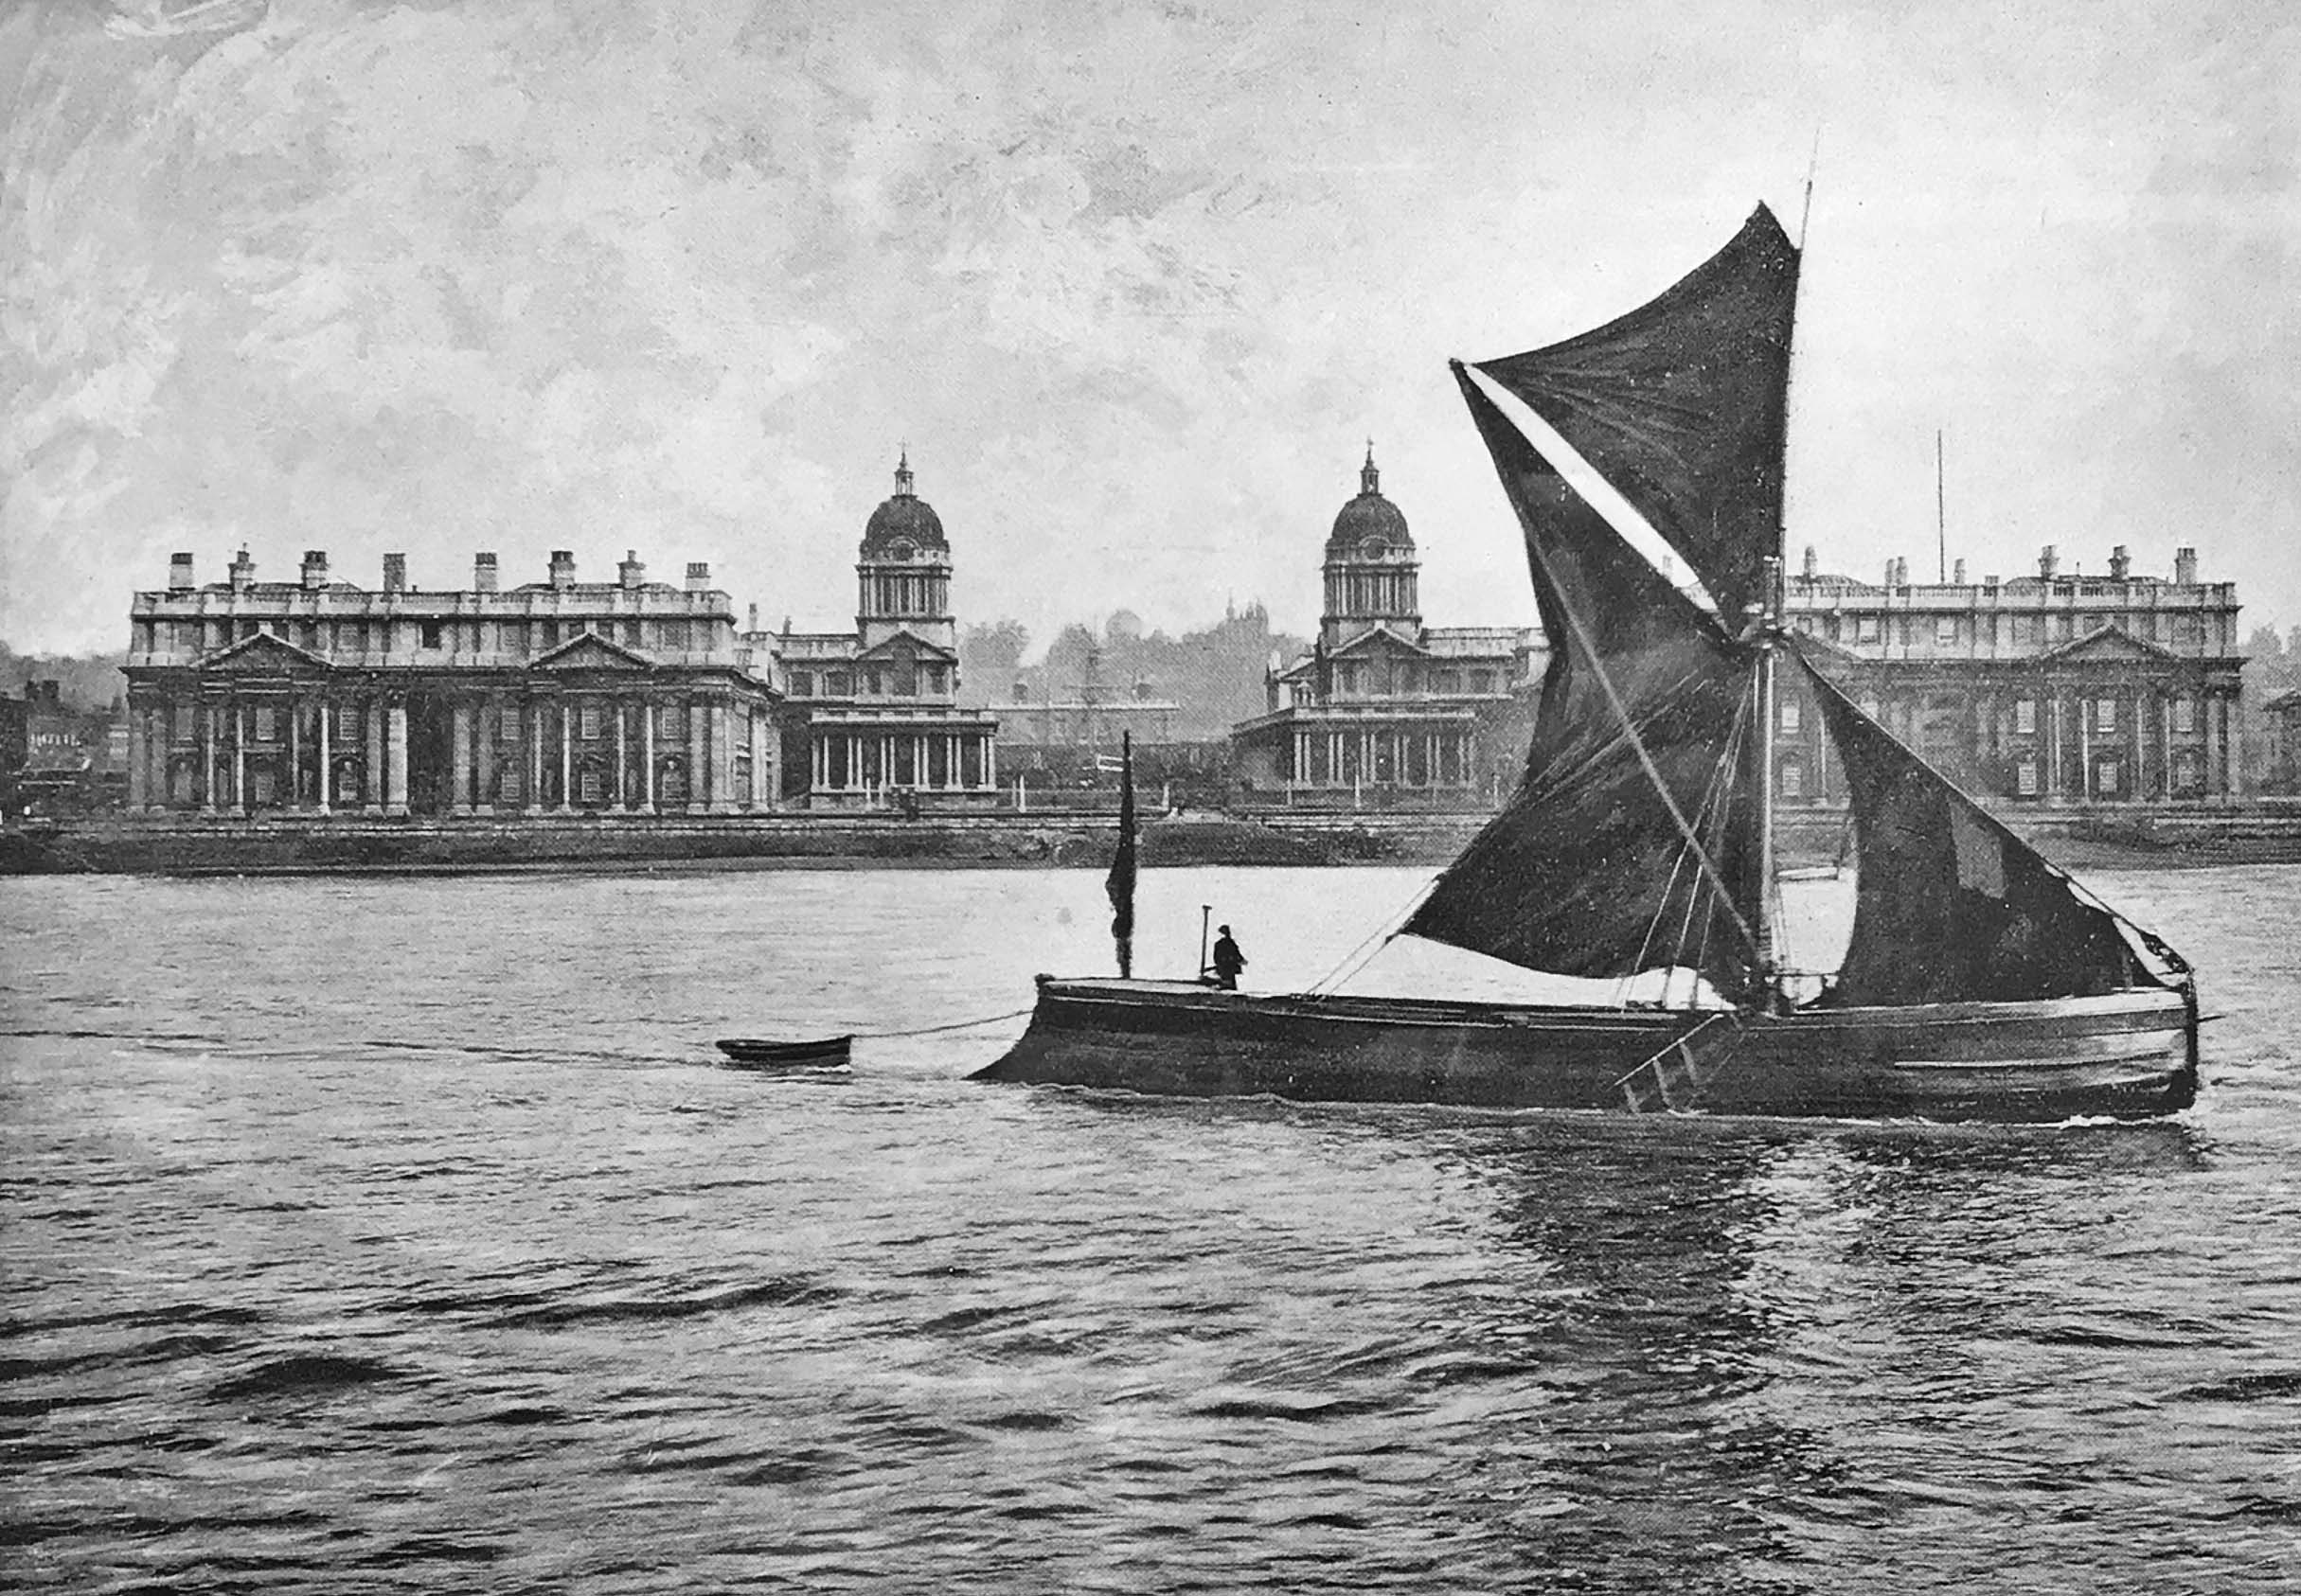 Royal Hospital and Thames Barge